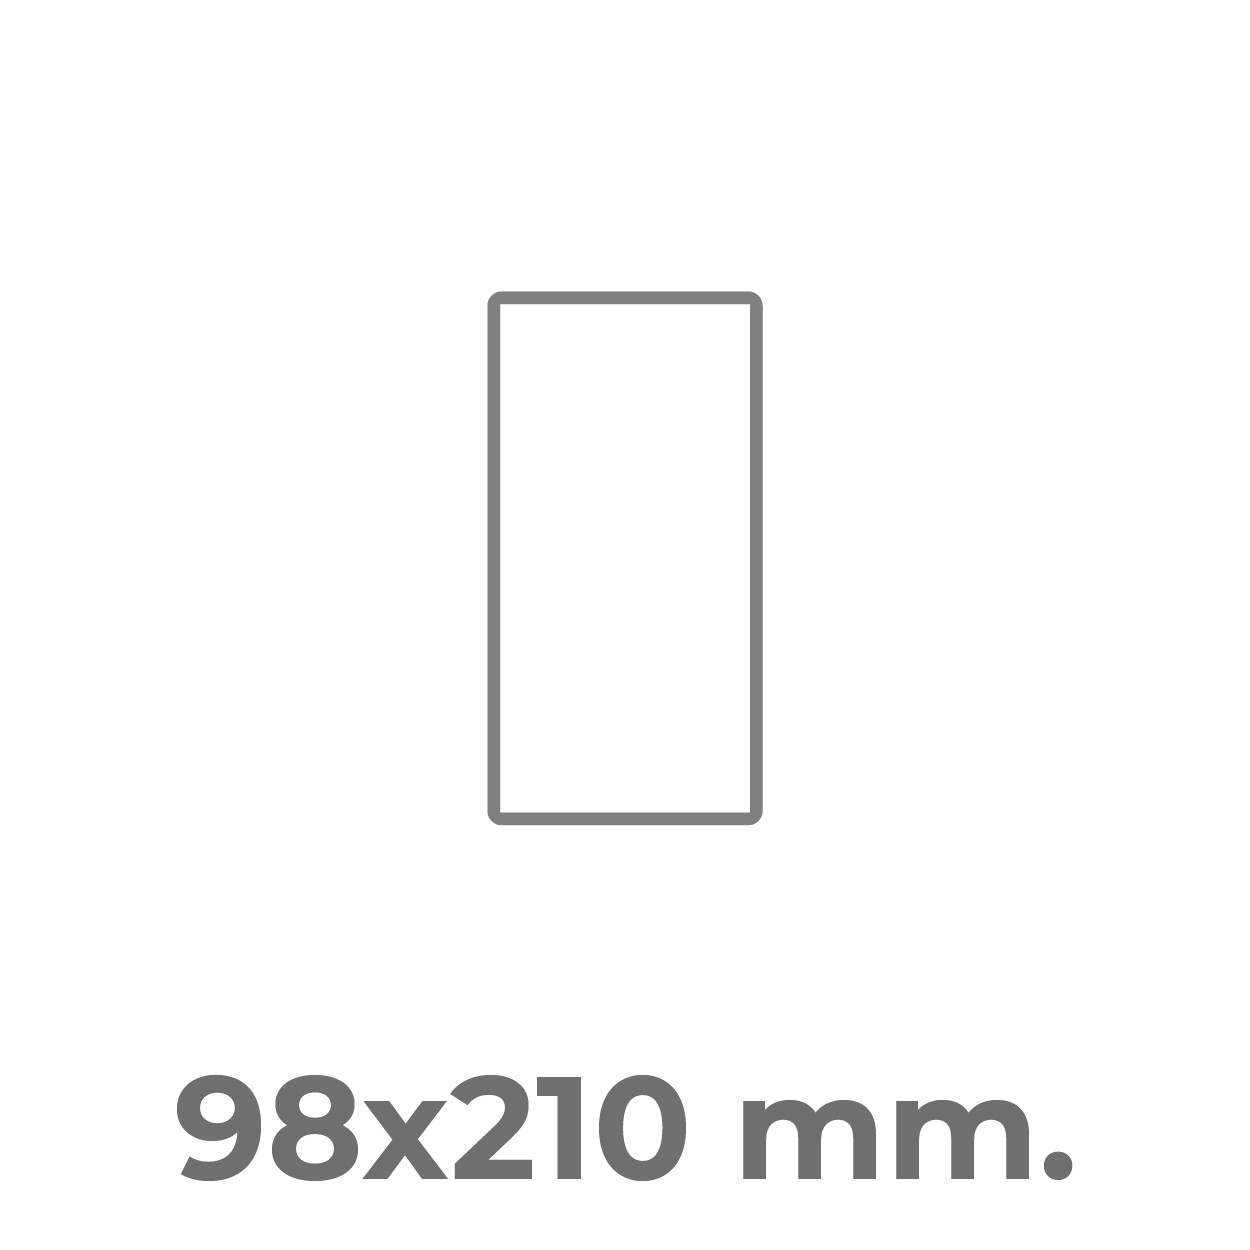 98x210 mm.